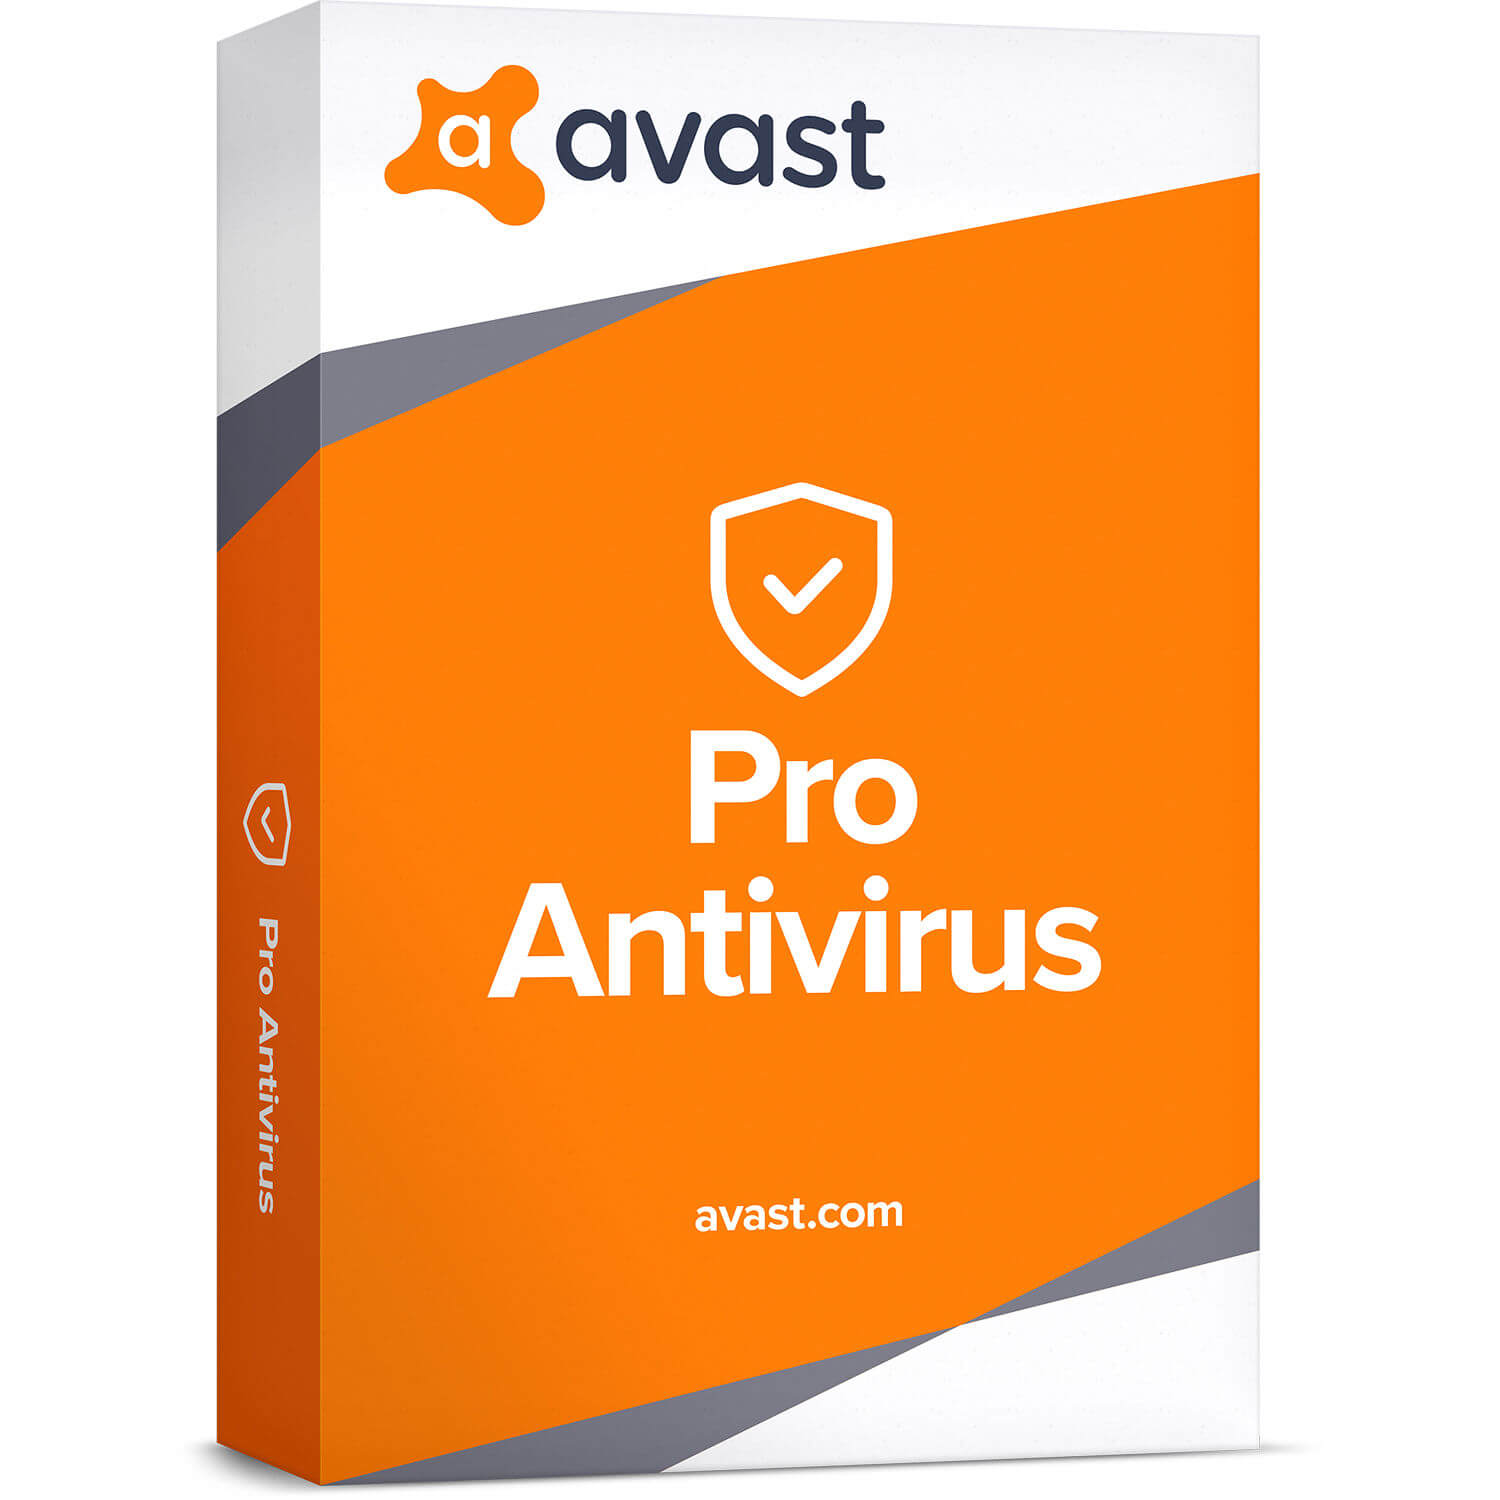 Avast Pro Antivirus Free Download